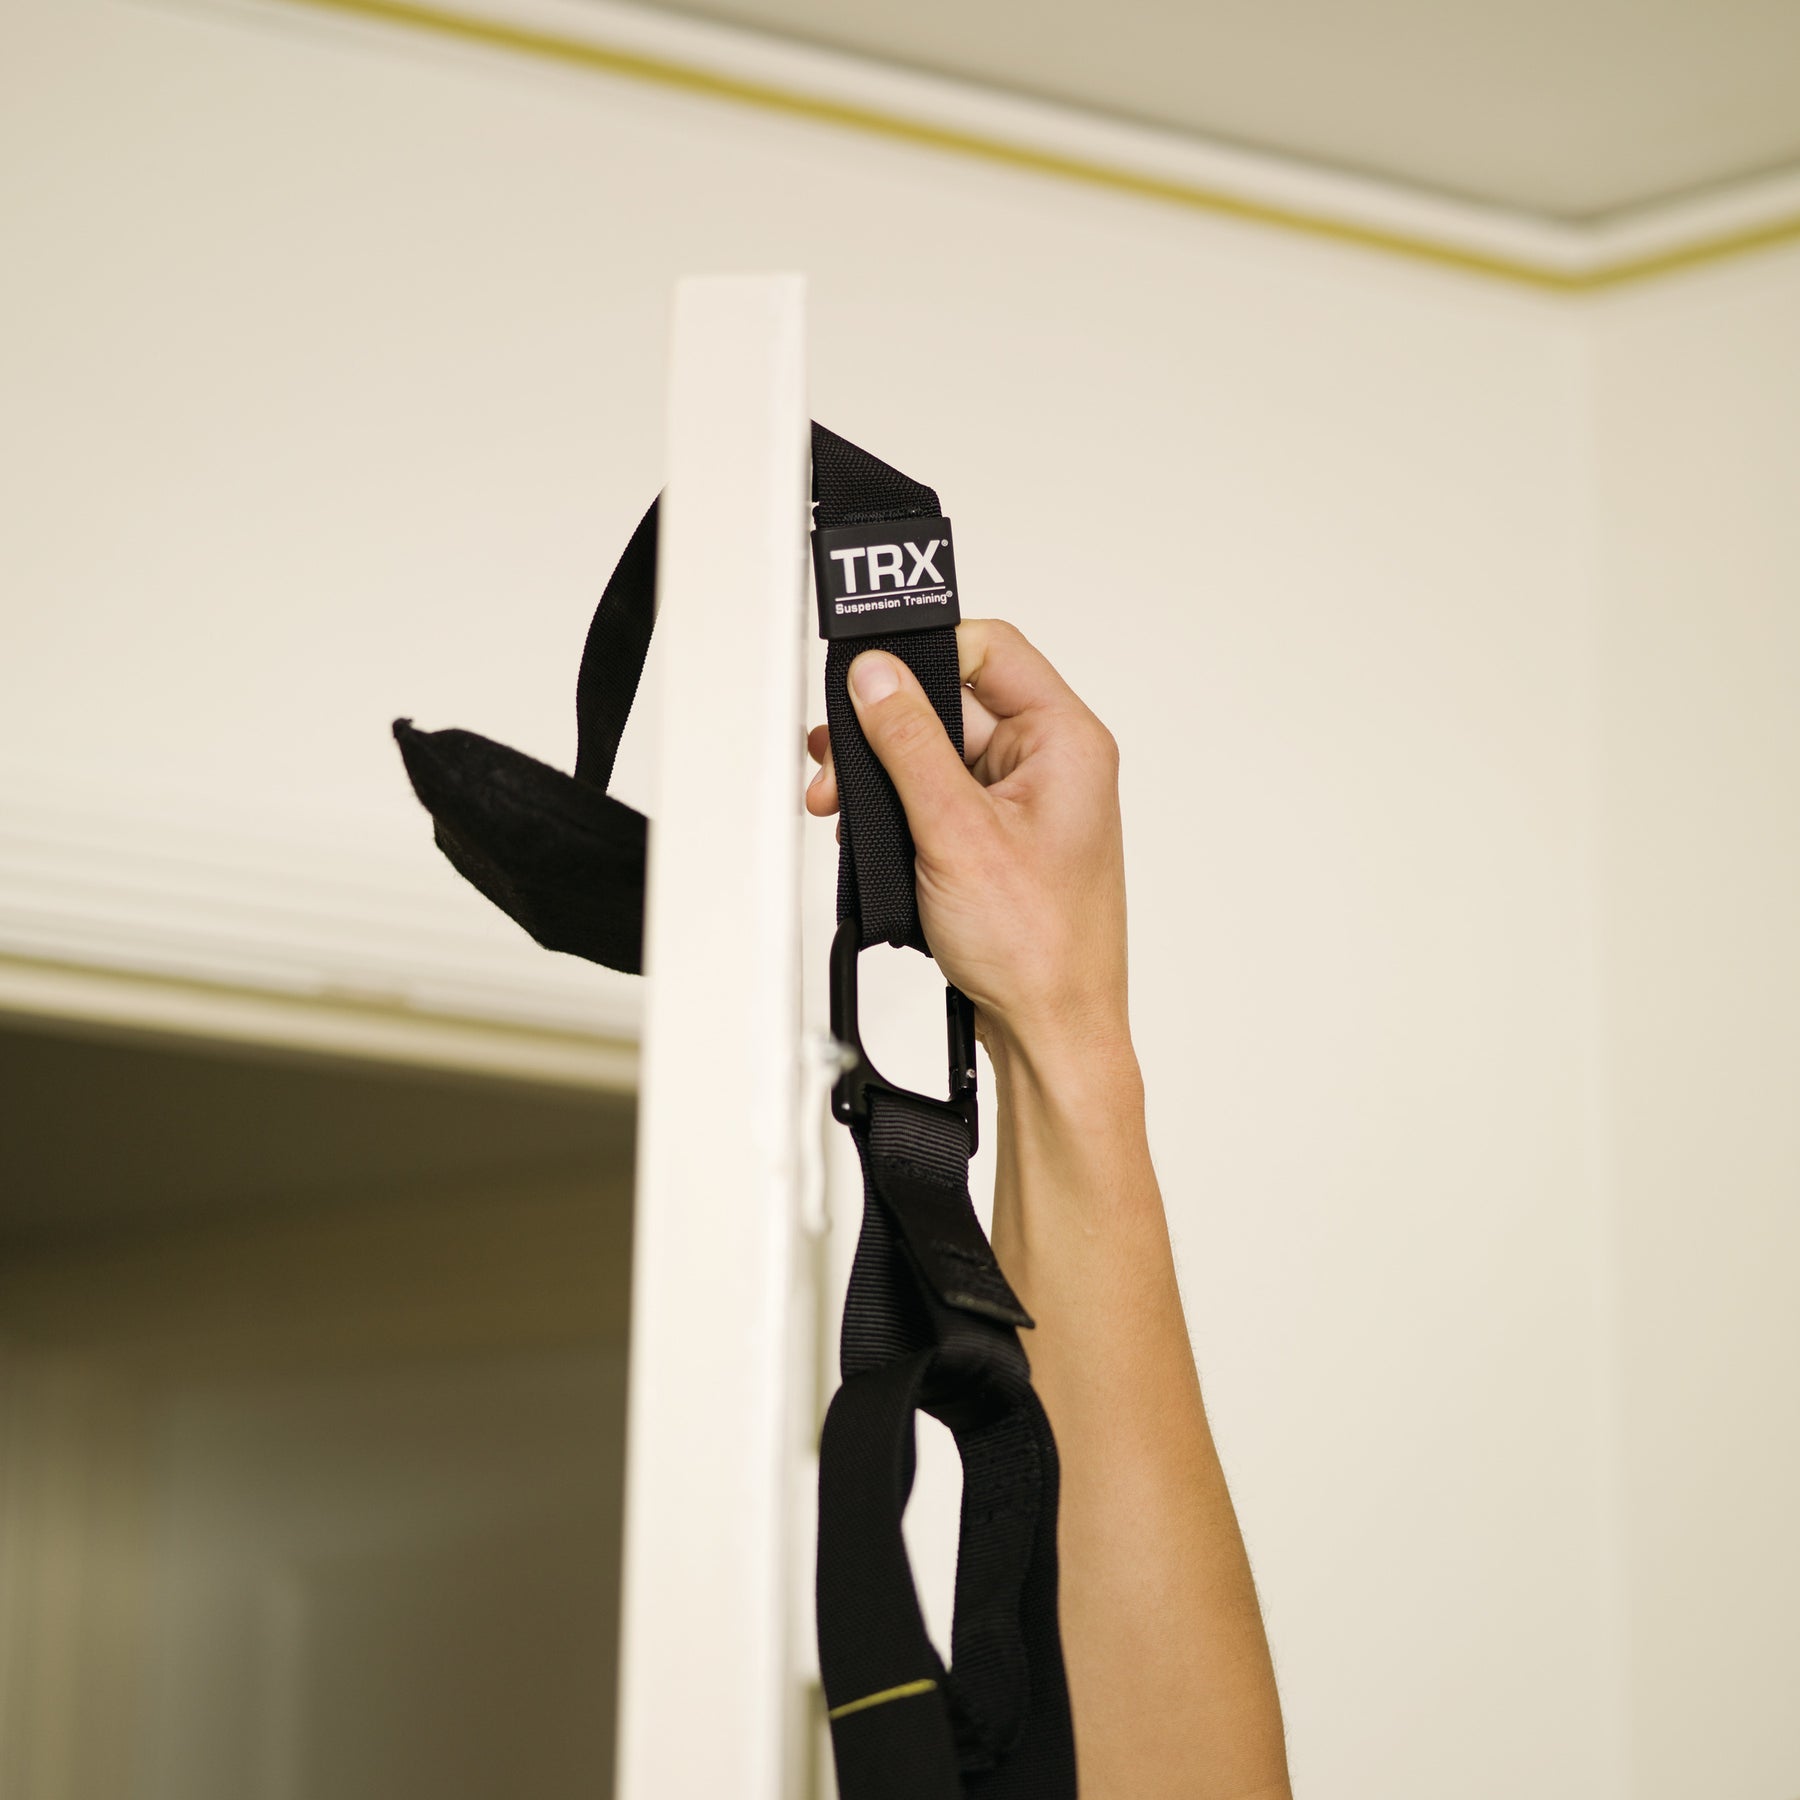 TRX Door Anchor: Transform Your Door into a Home Gym